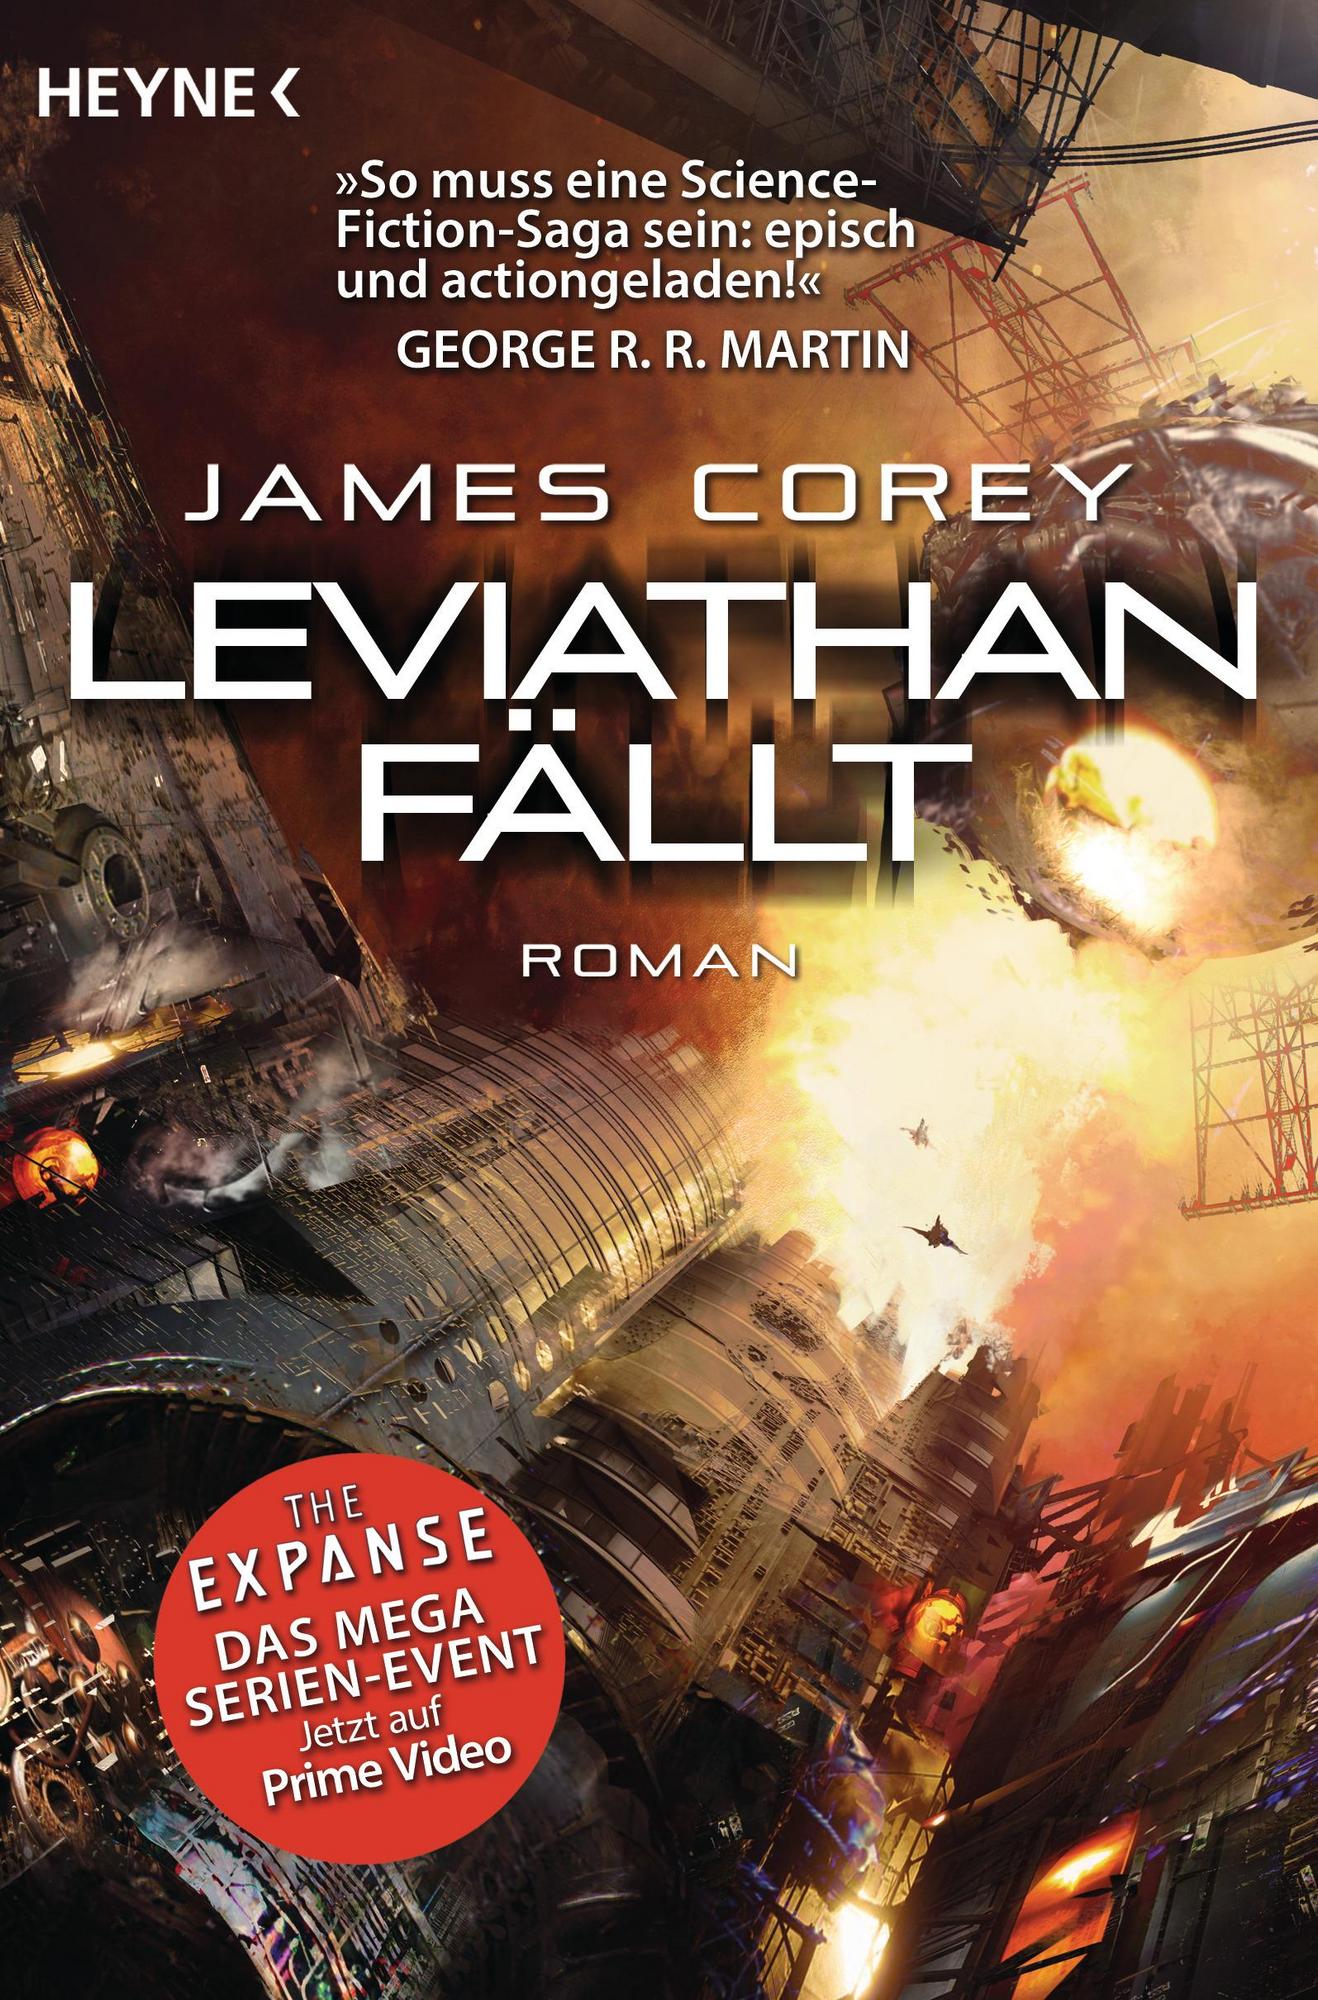 James Corey: Leviathan fällt (EBook, German language)